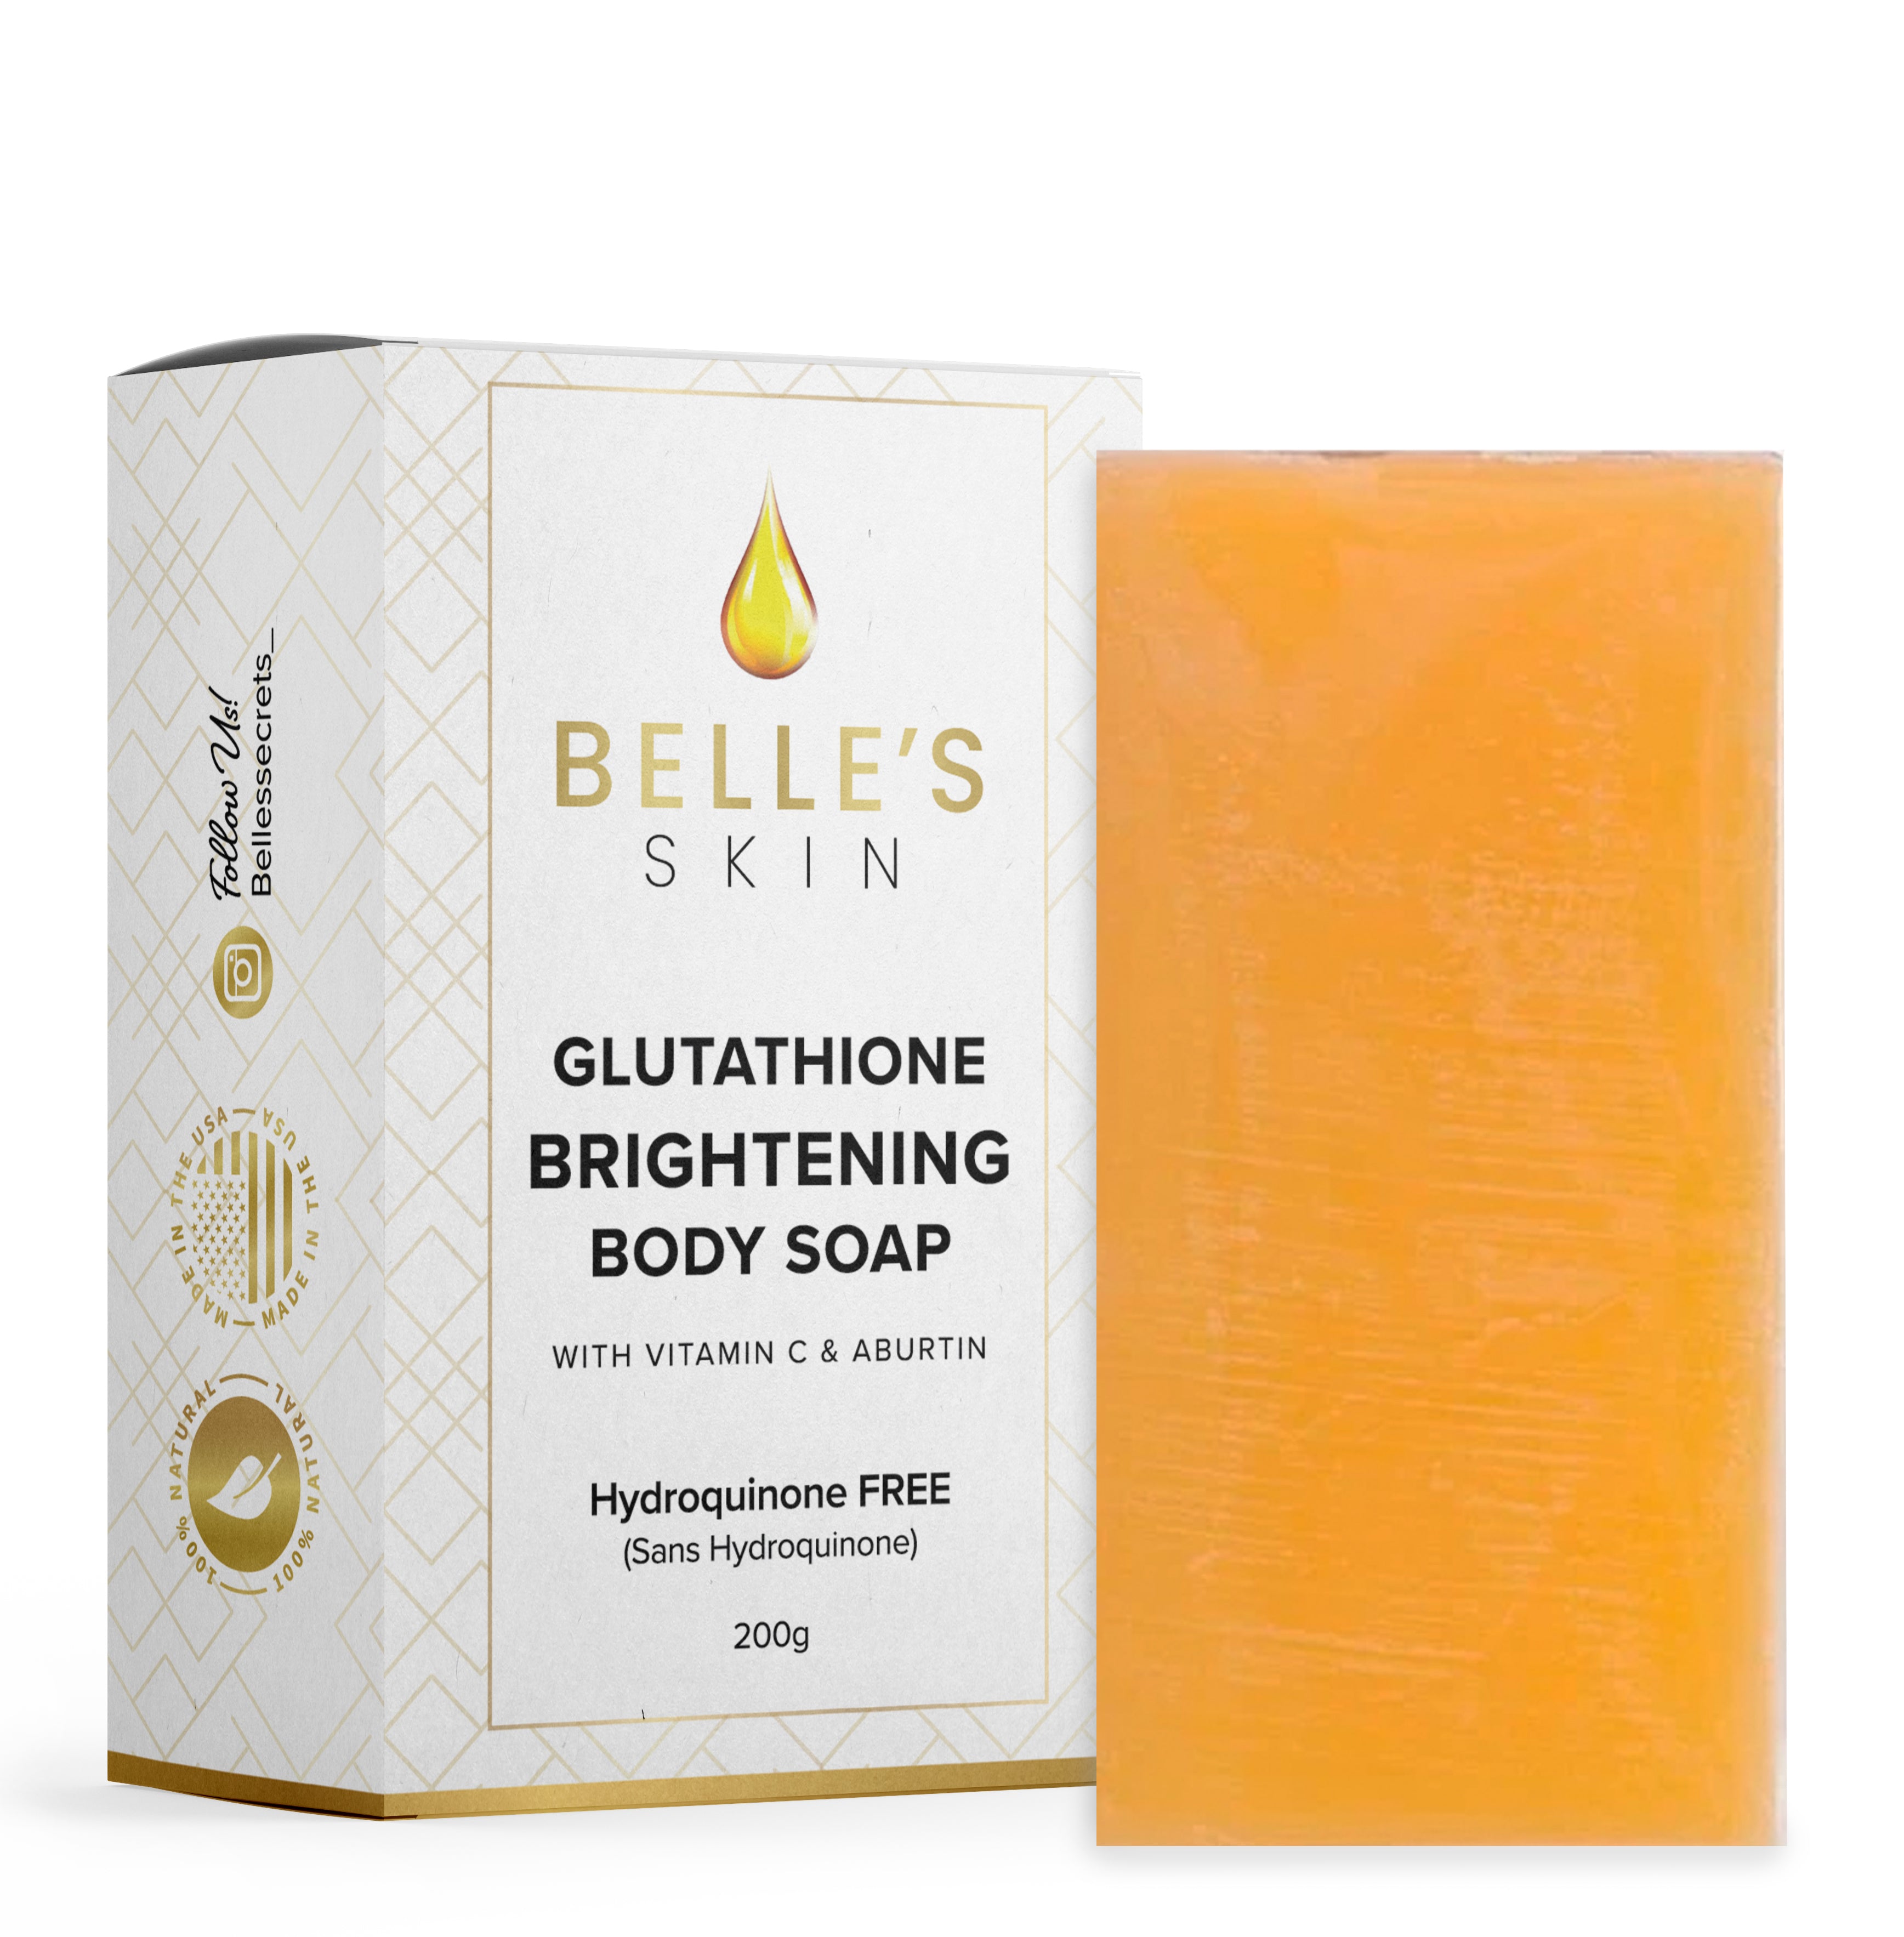 Belle's Skin Brightening Body Soap